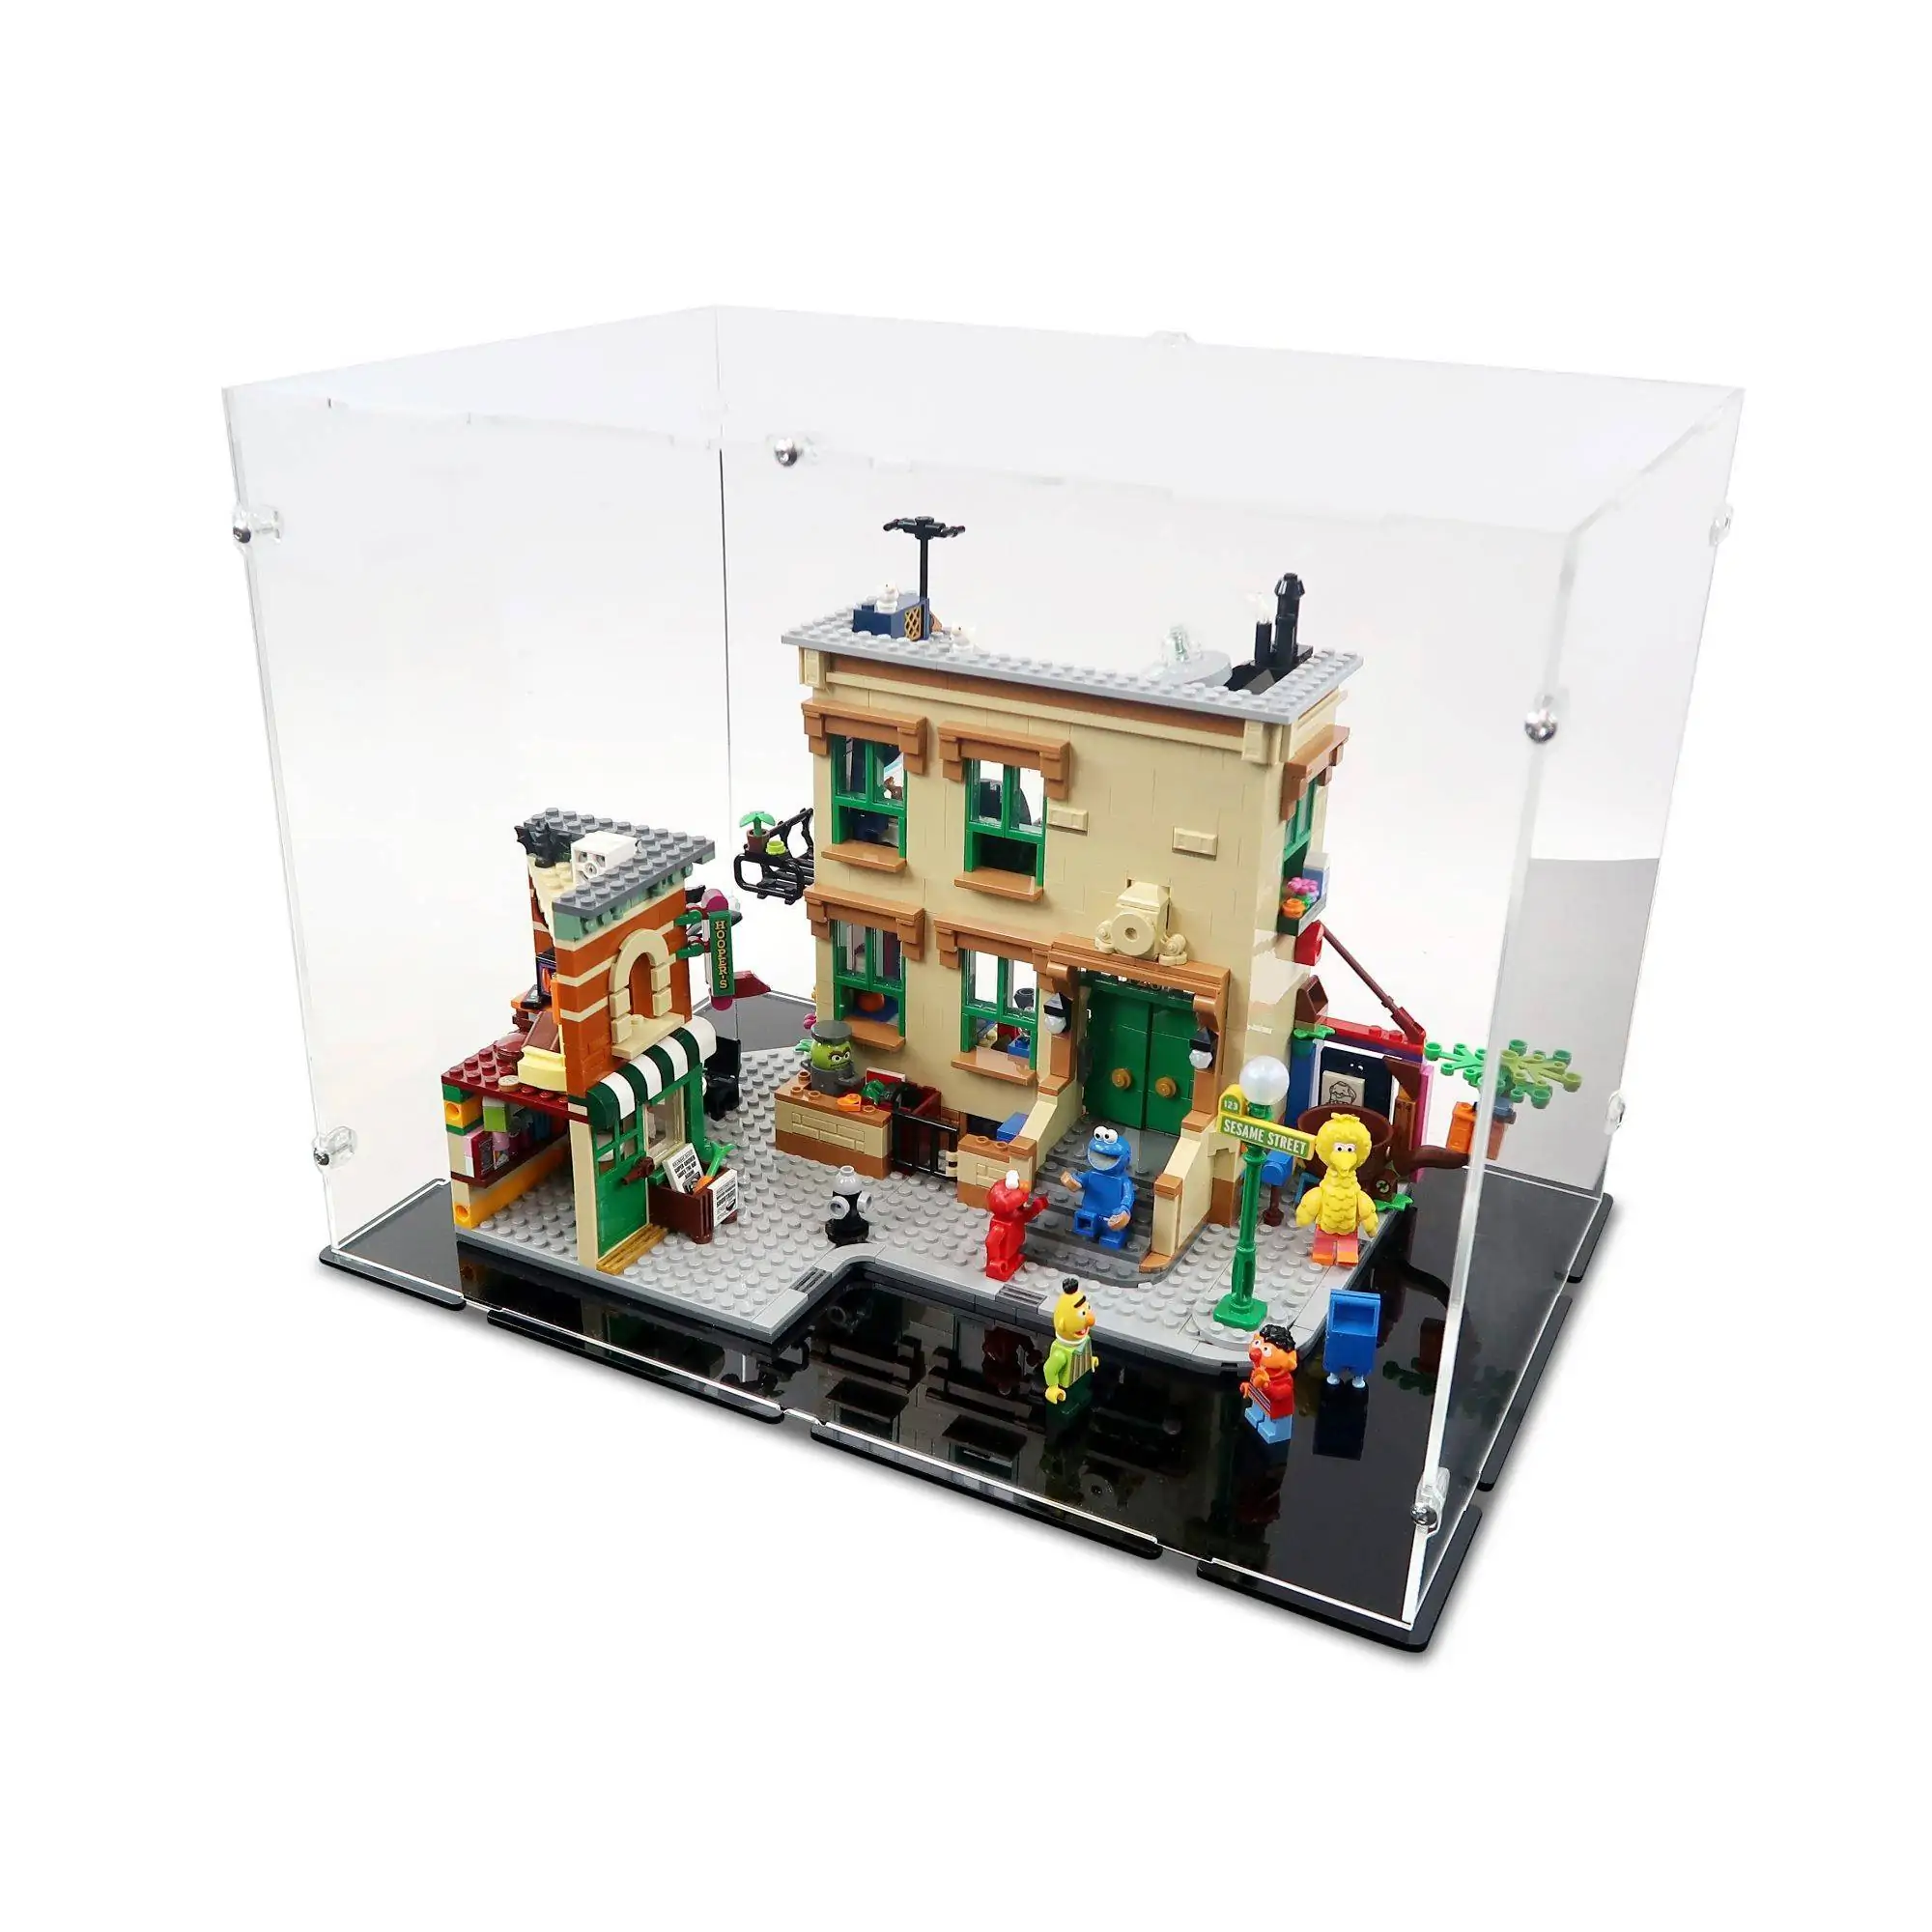 Sesame Street LEGO Collection